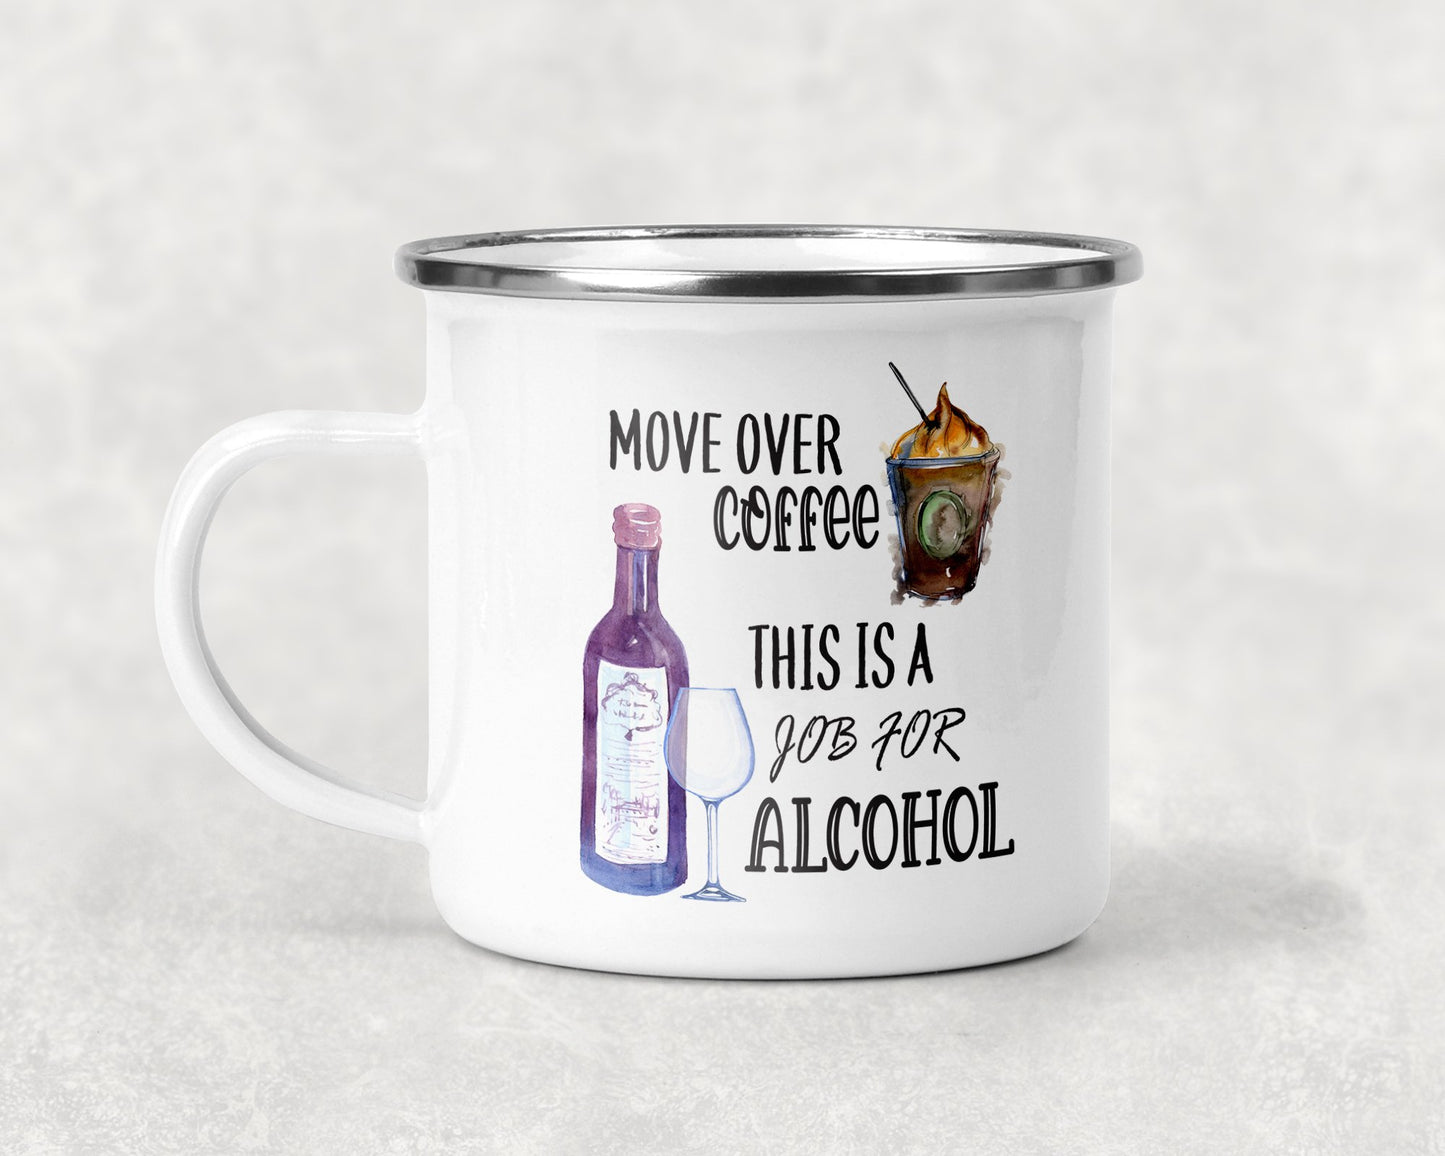 Move Over Coffee This Is A Job For Alcohol Mug